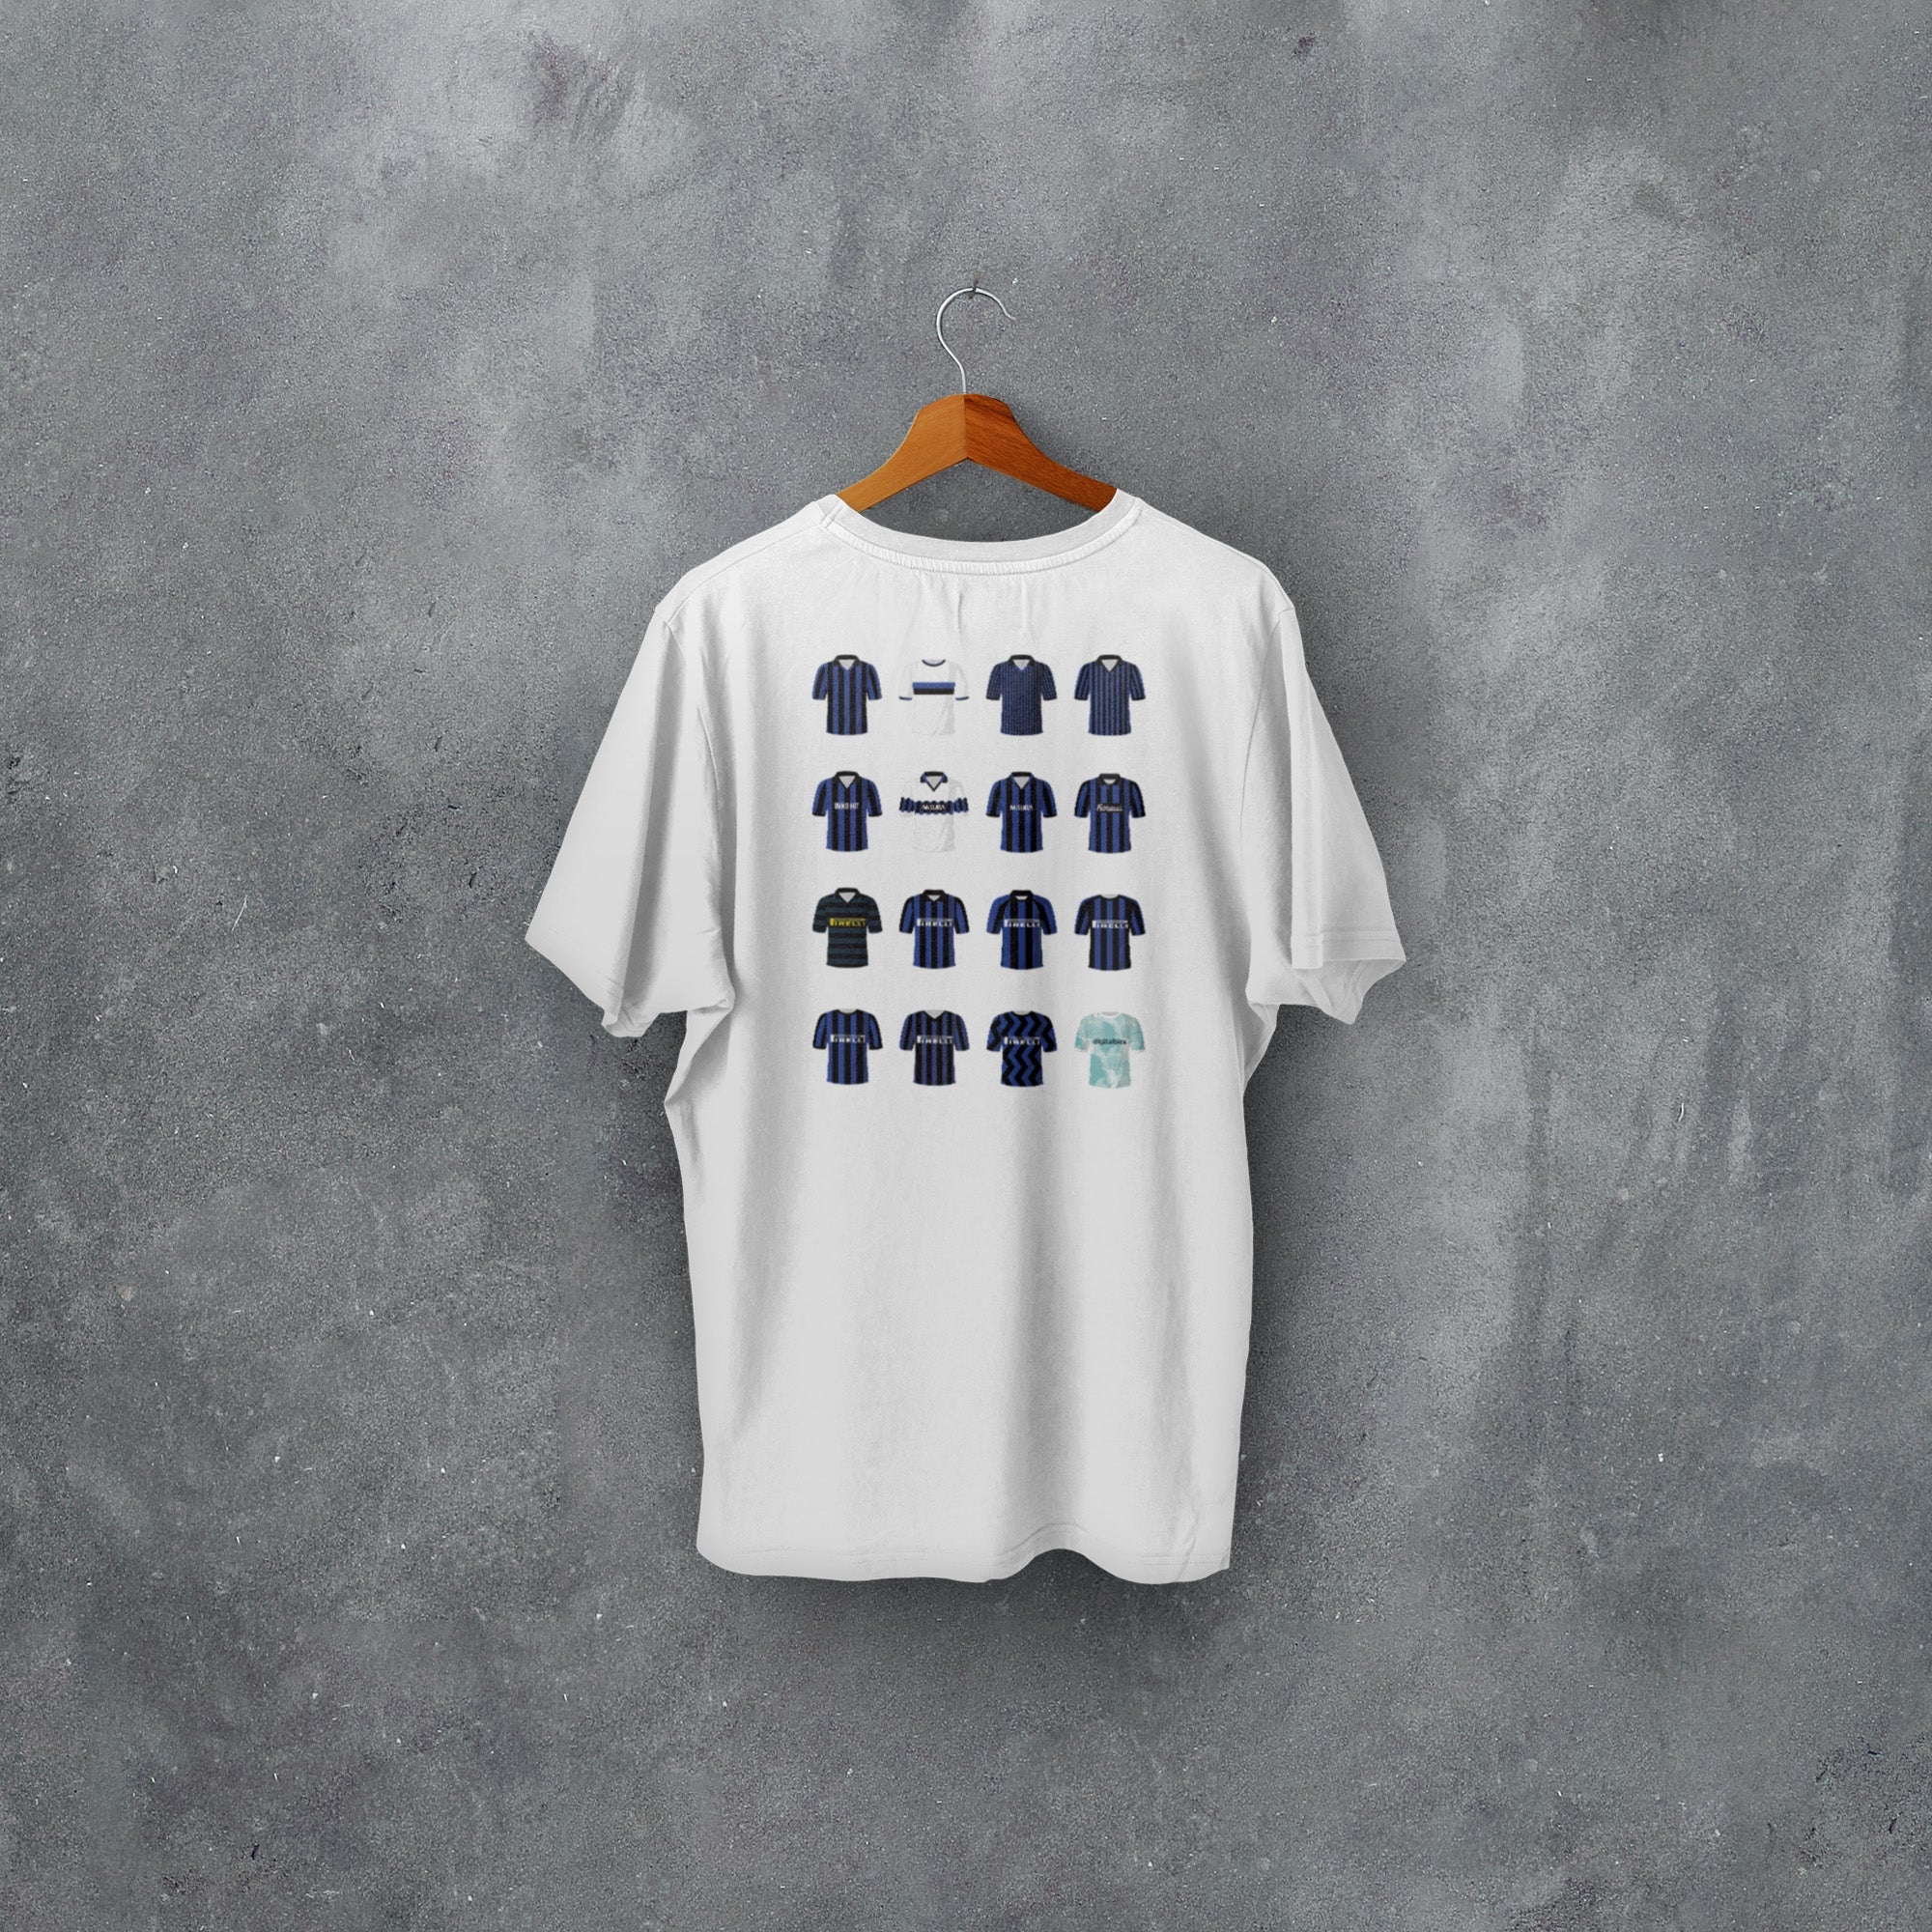 Inter Classic Kits Football T-Shirt